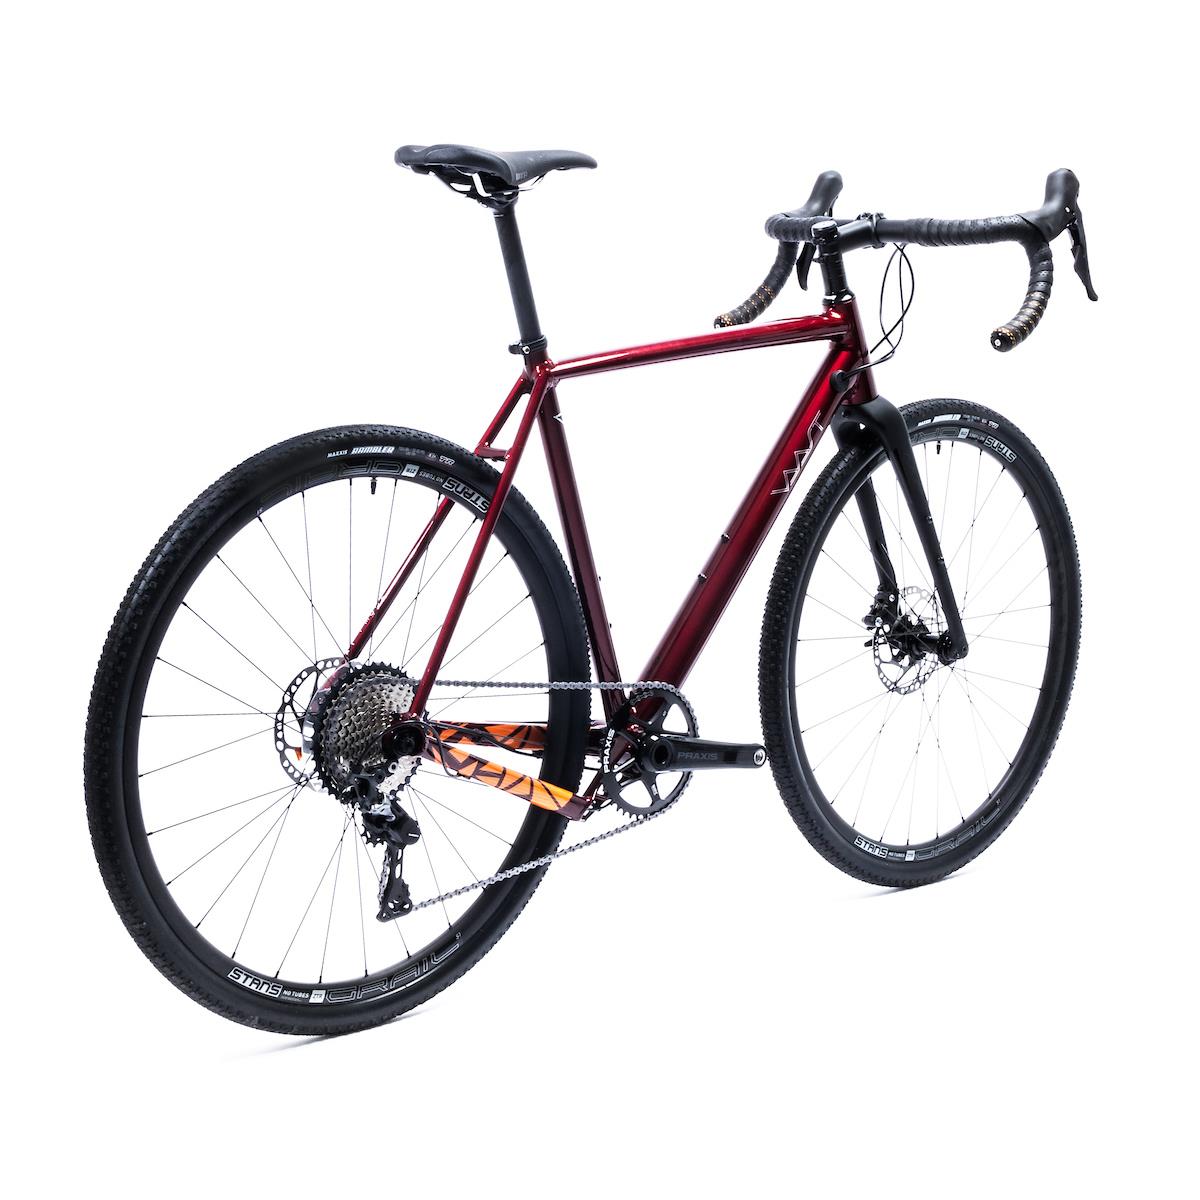 Vaast A/1 700C GRX L Bike, 56 cm, Berry Red